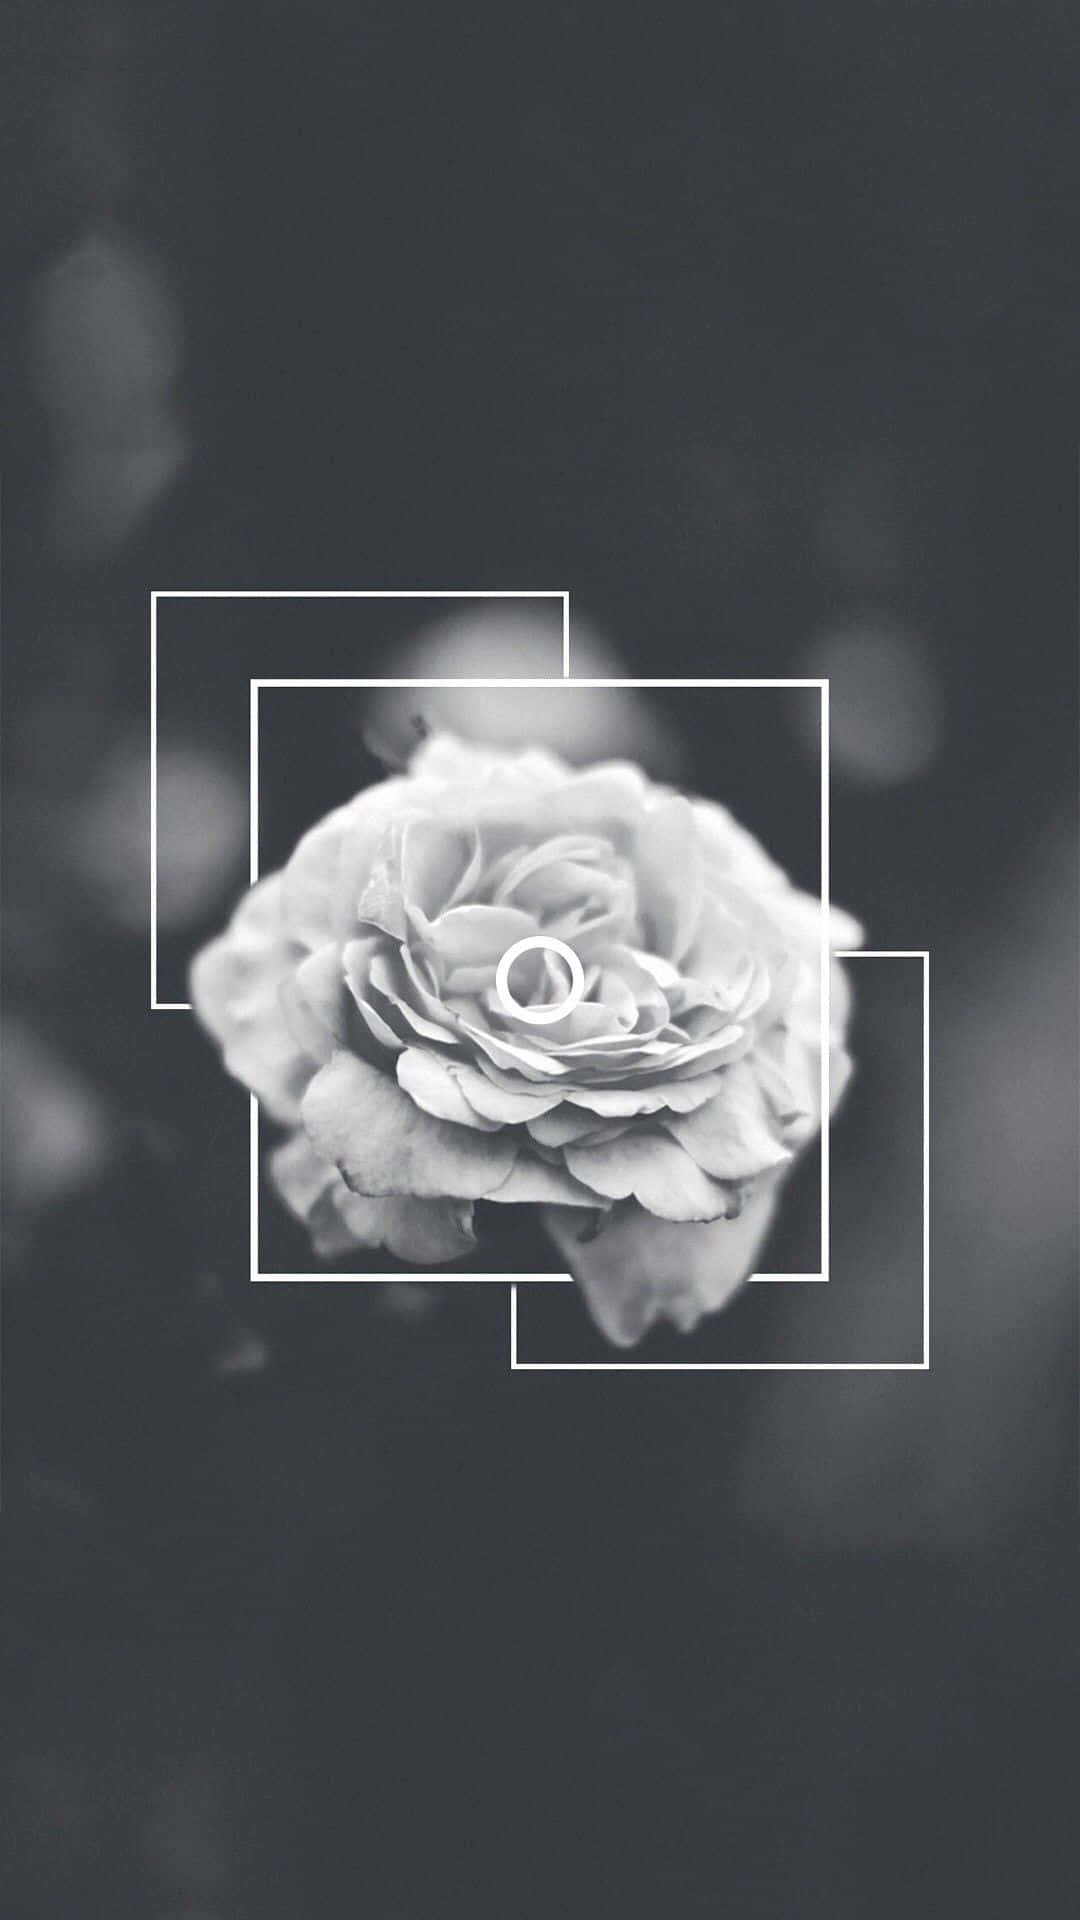 Aesthetic Monochrome Rose Tumblr Photography iPhone Wallpaper